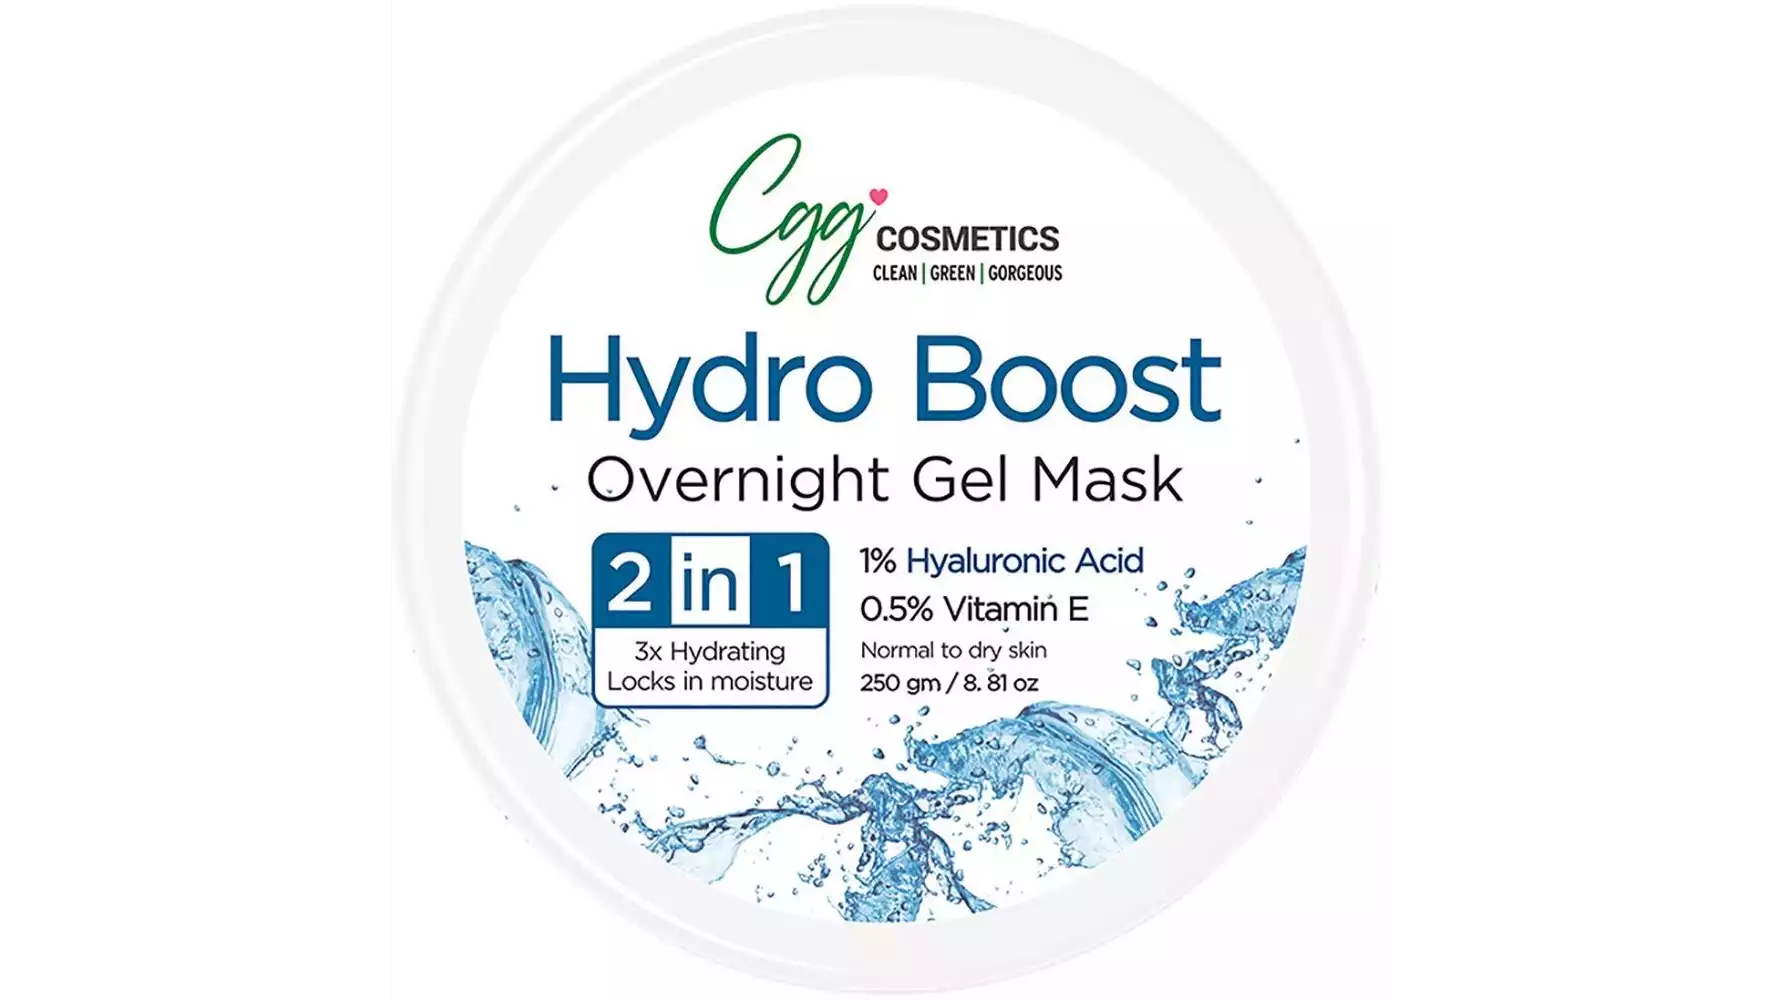 Cgg Cosmetics Hydro Boost Overnight Gel Mask (250g)